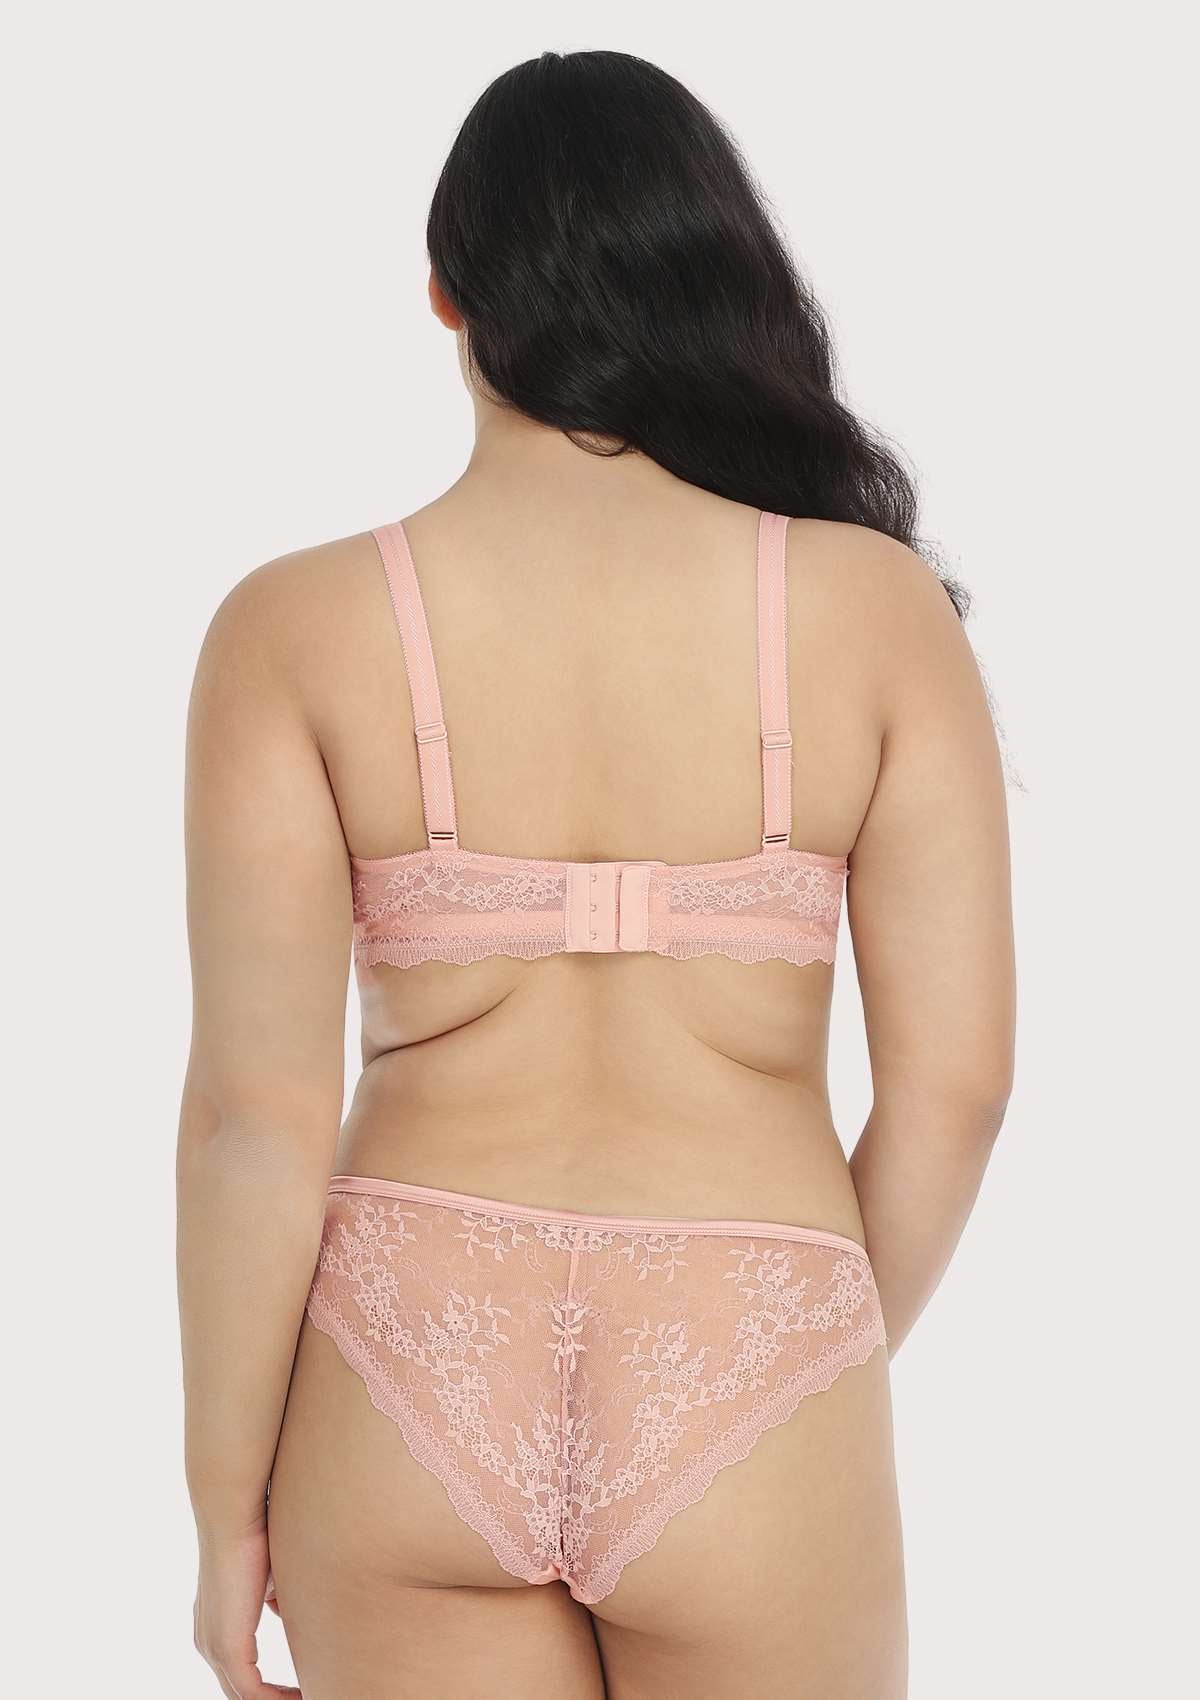 HSIA Floral Lace Unlined Bridal Balconette Delicate Bra Panty Set - Pink / 36 / C